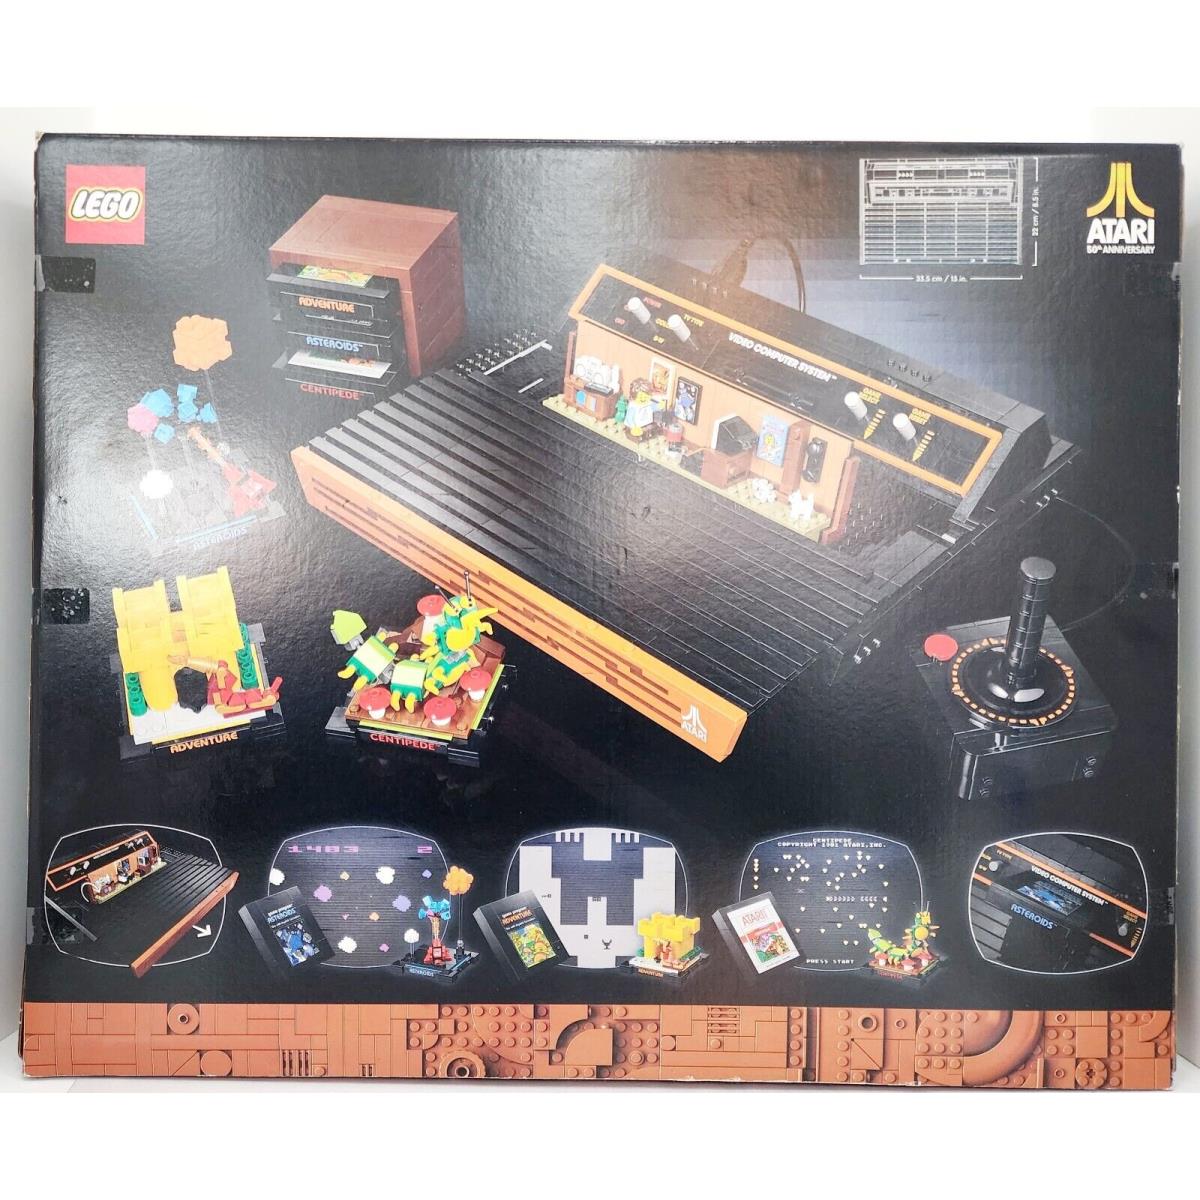 Lego Atari Video Computer System 2600 10306 2532 Pieces